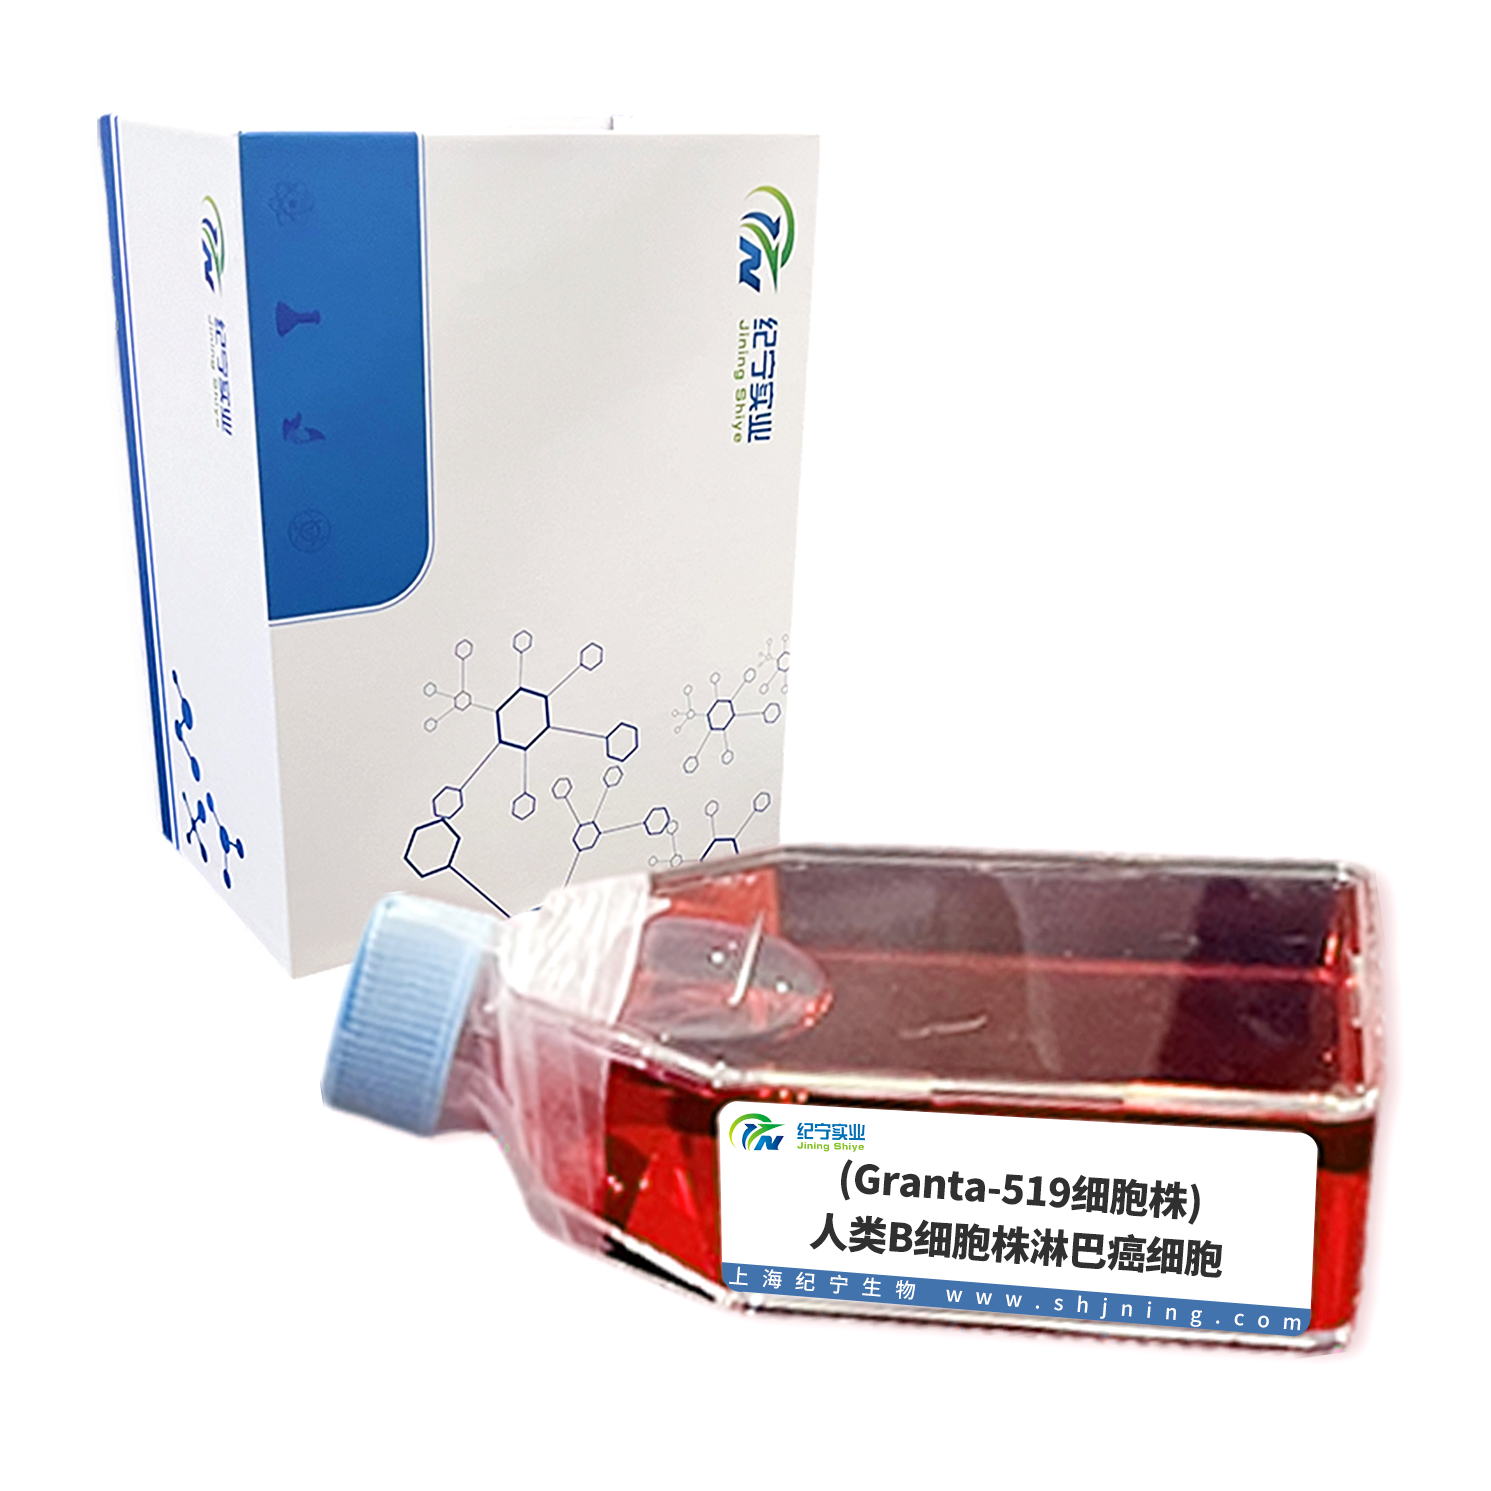 (Granta-519细胞株)人类B细胞株淋巴癌细胞